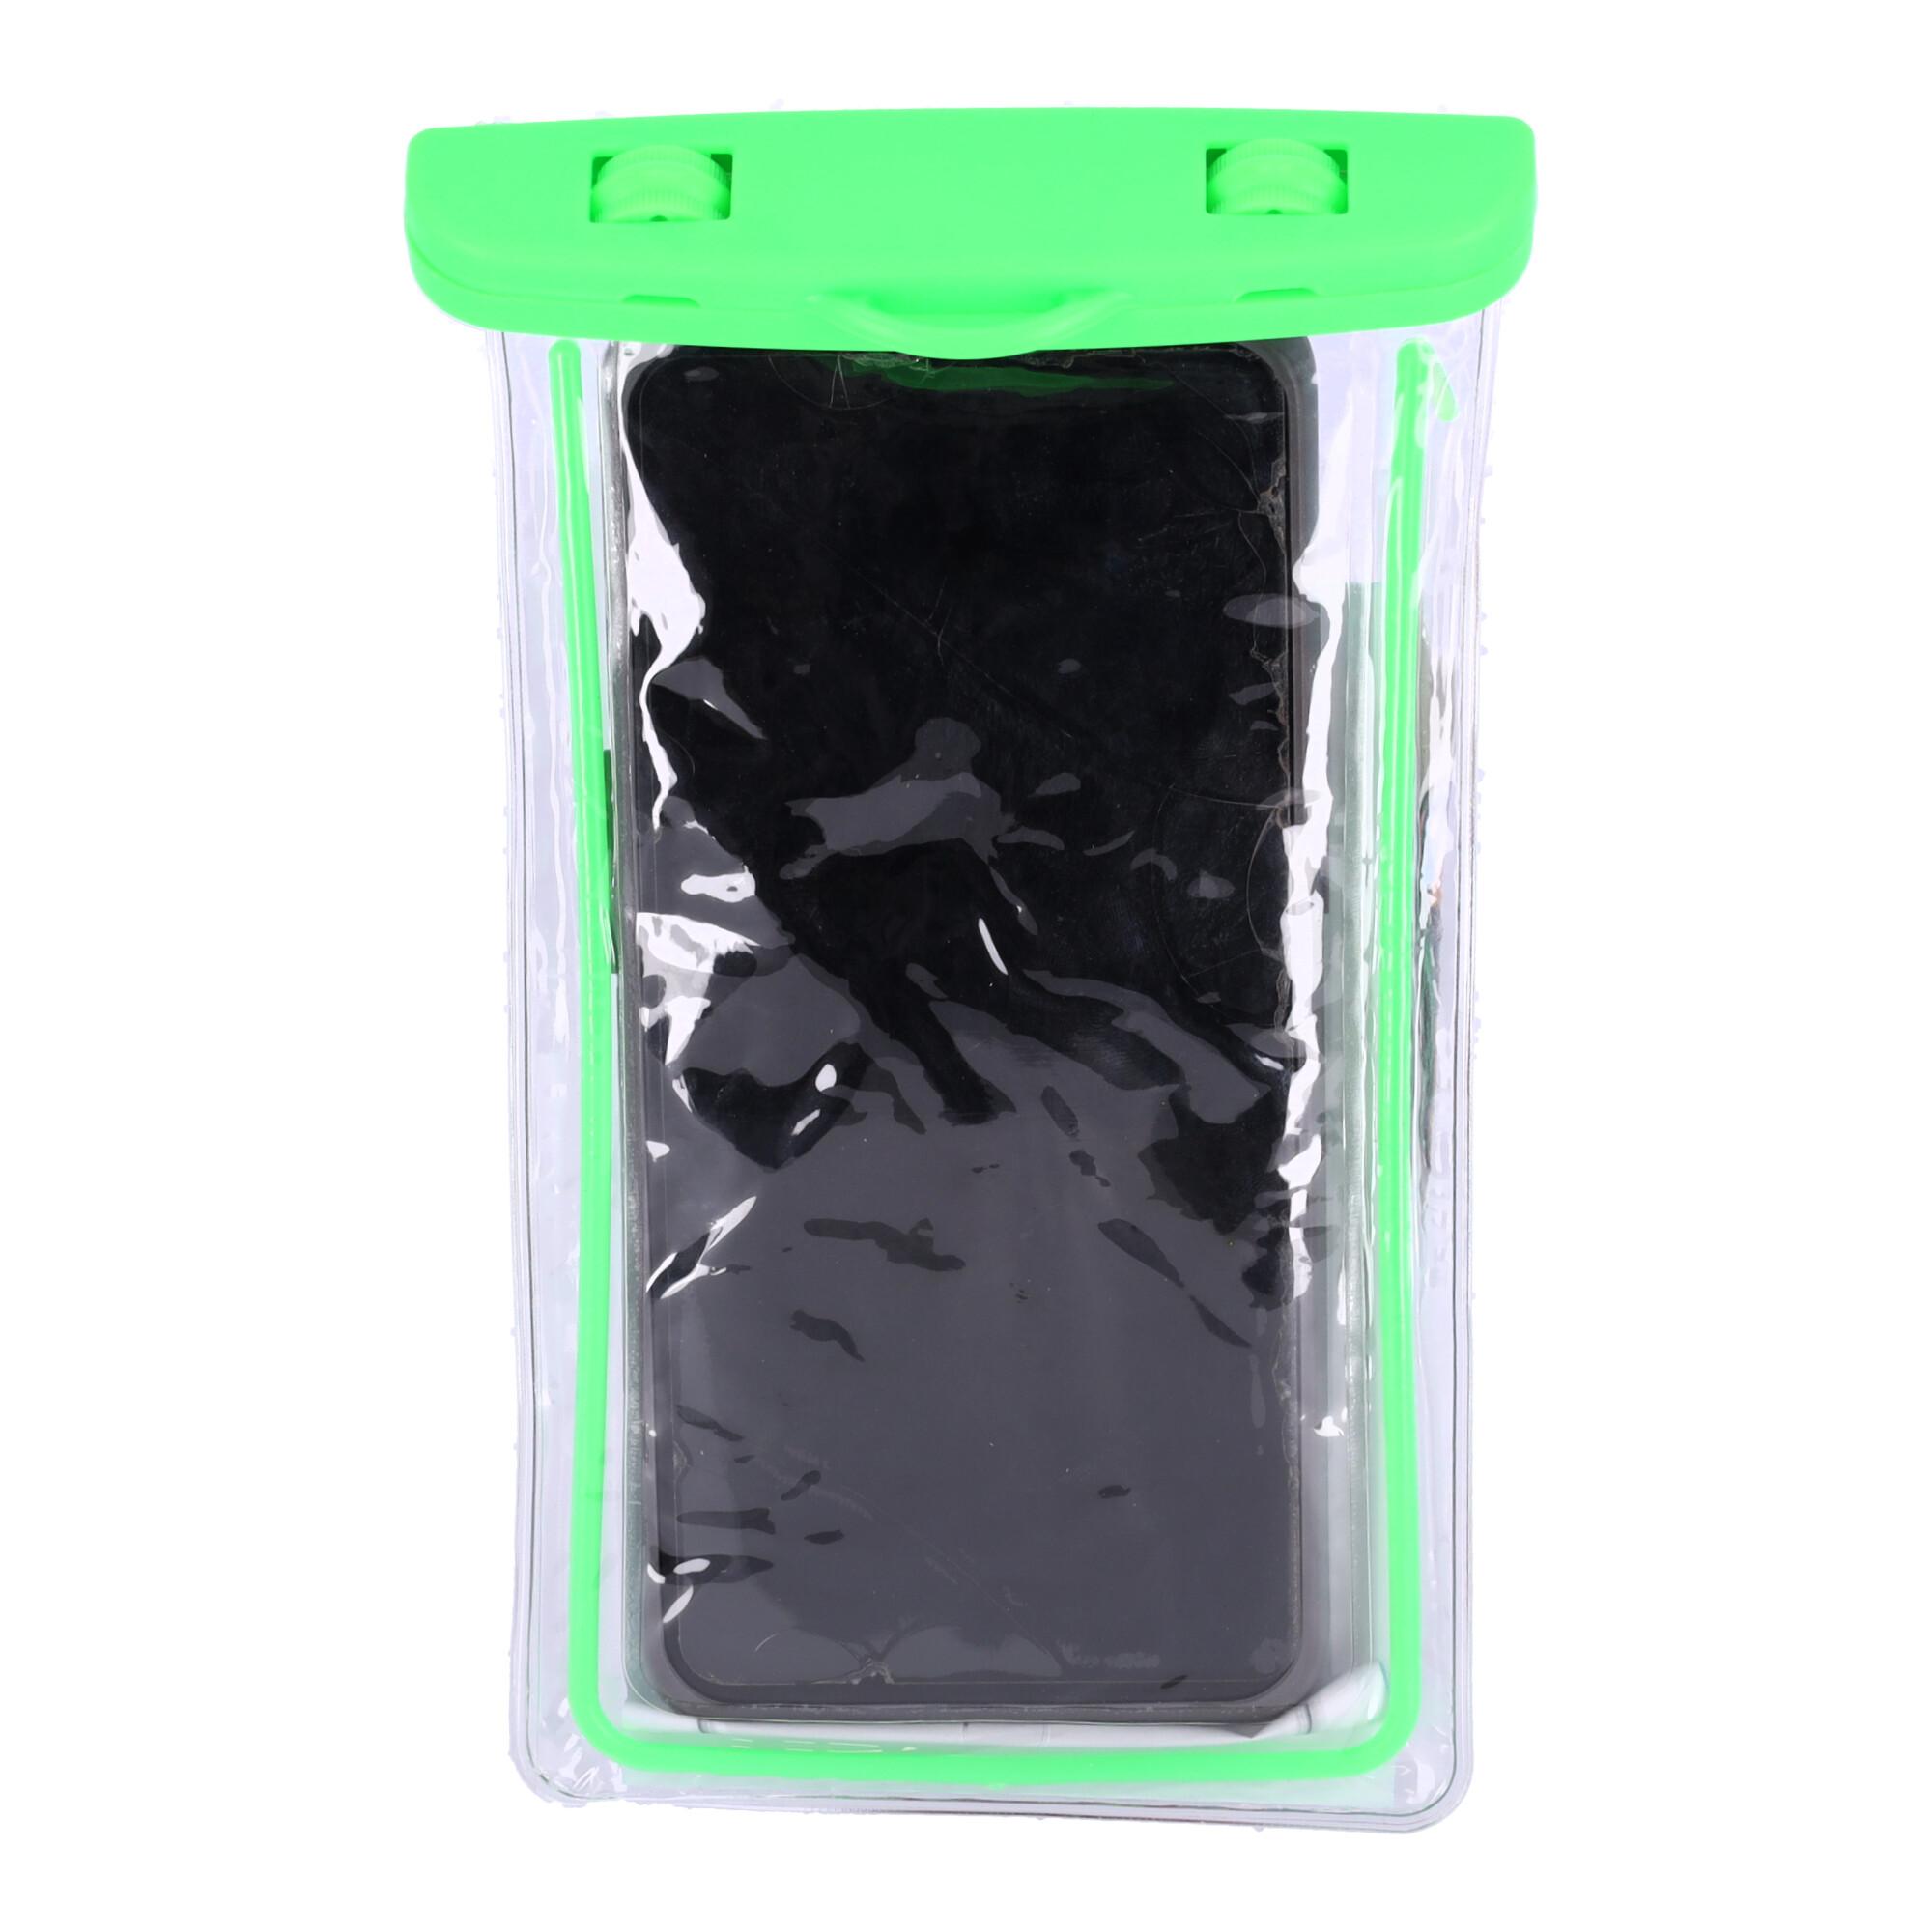 Waterproof universal case, phone cover - green